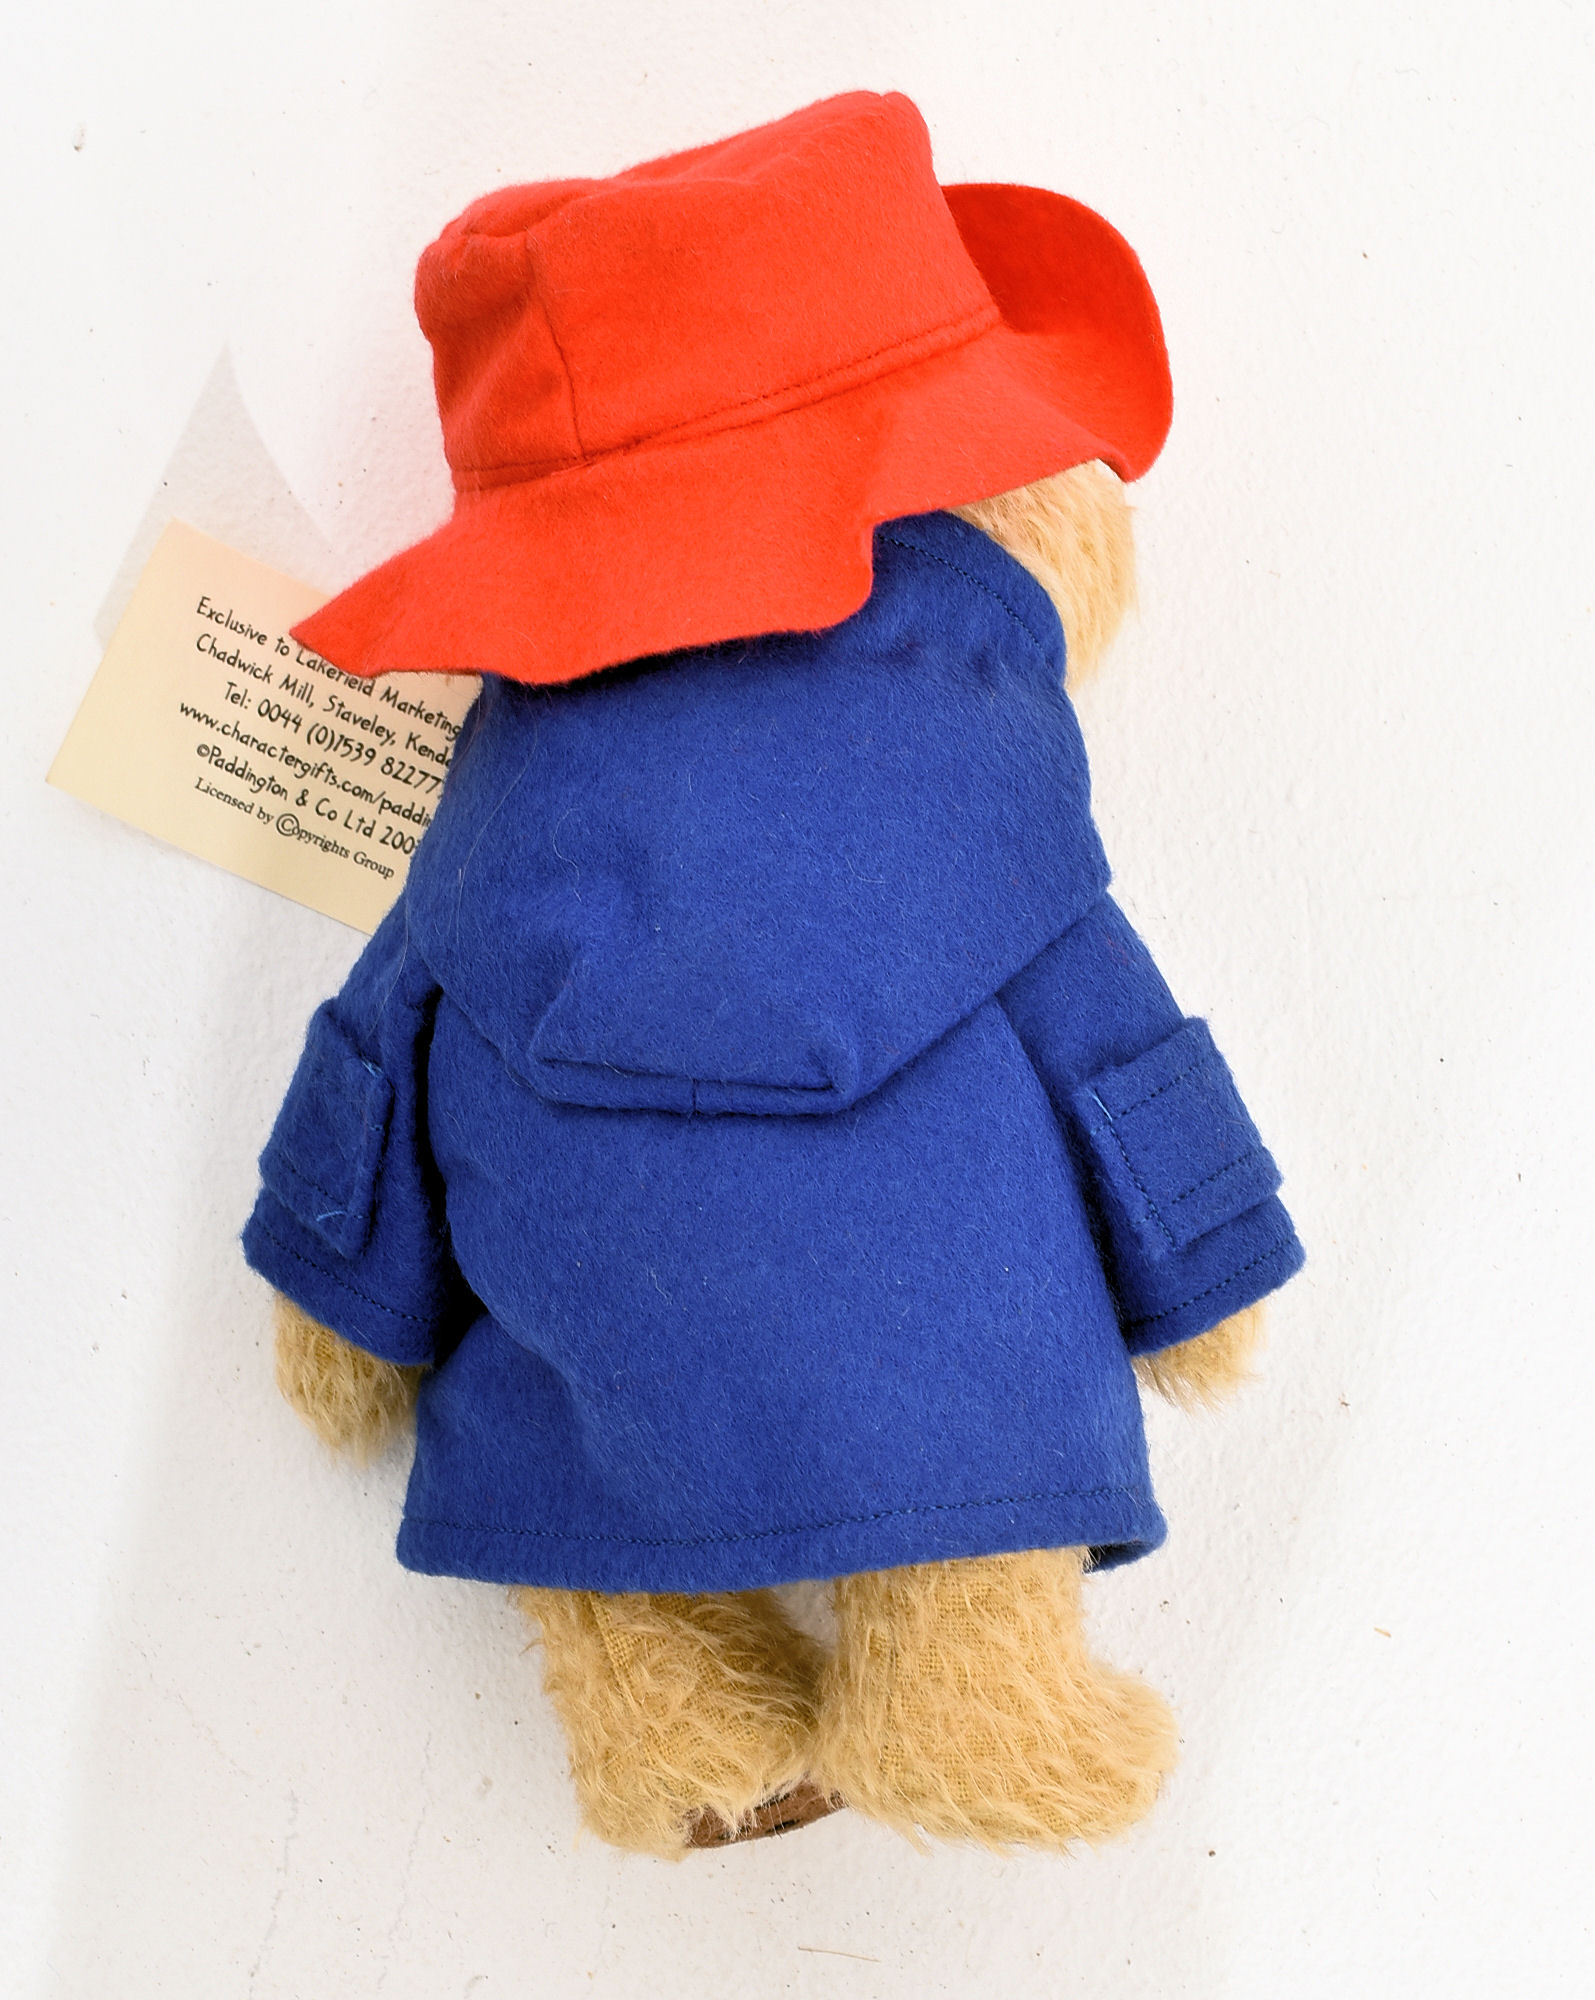 A Boxed Special Edition Paddington Bear Teddy Bear - Image 3 of 4